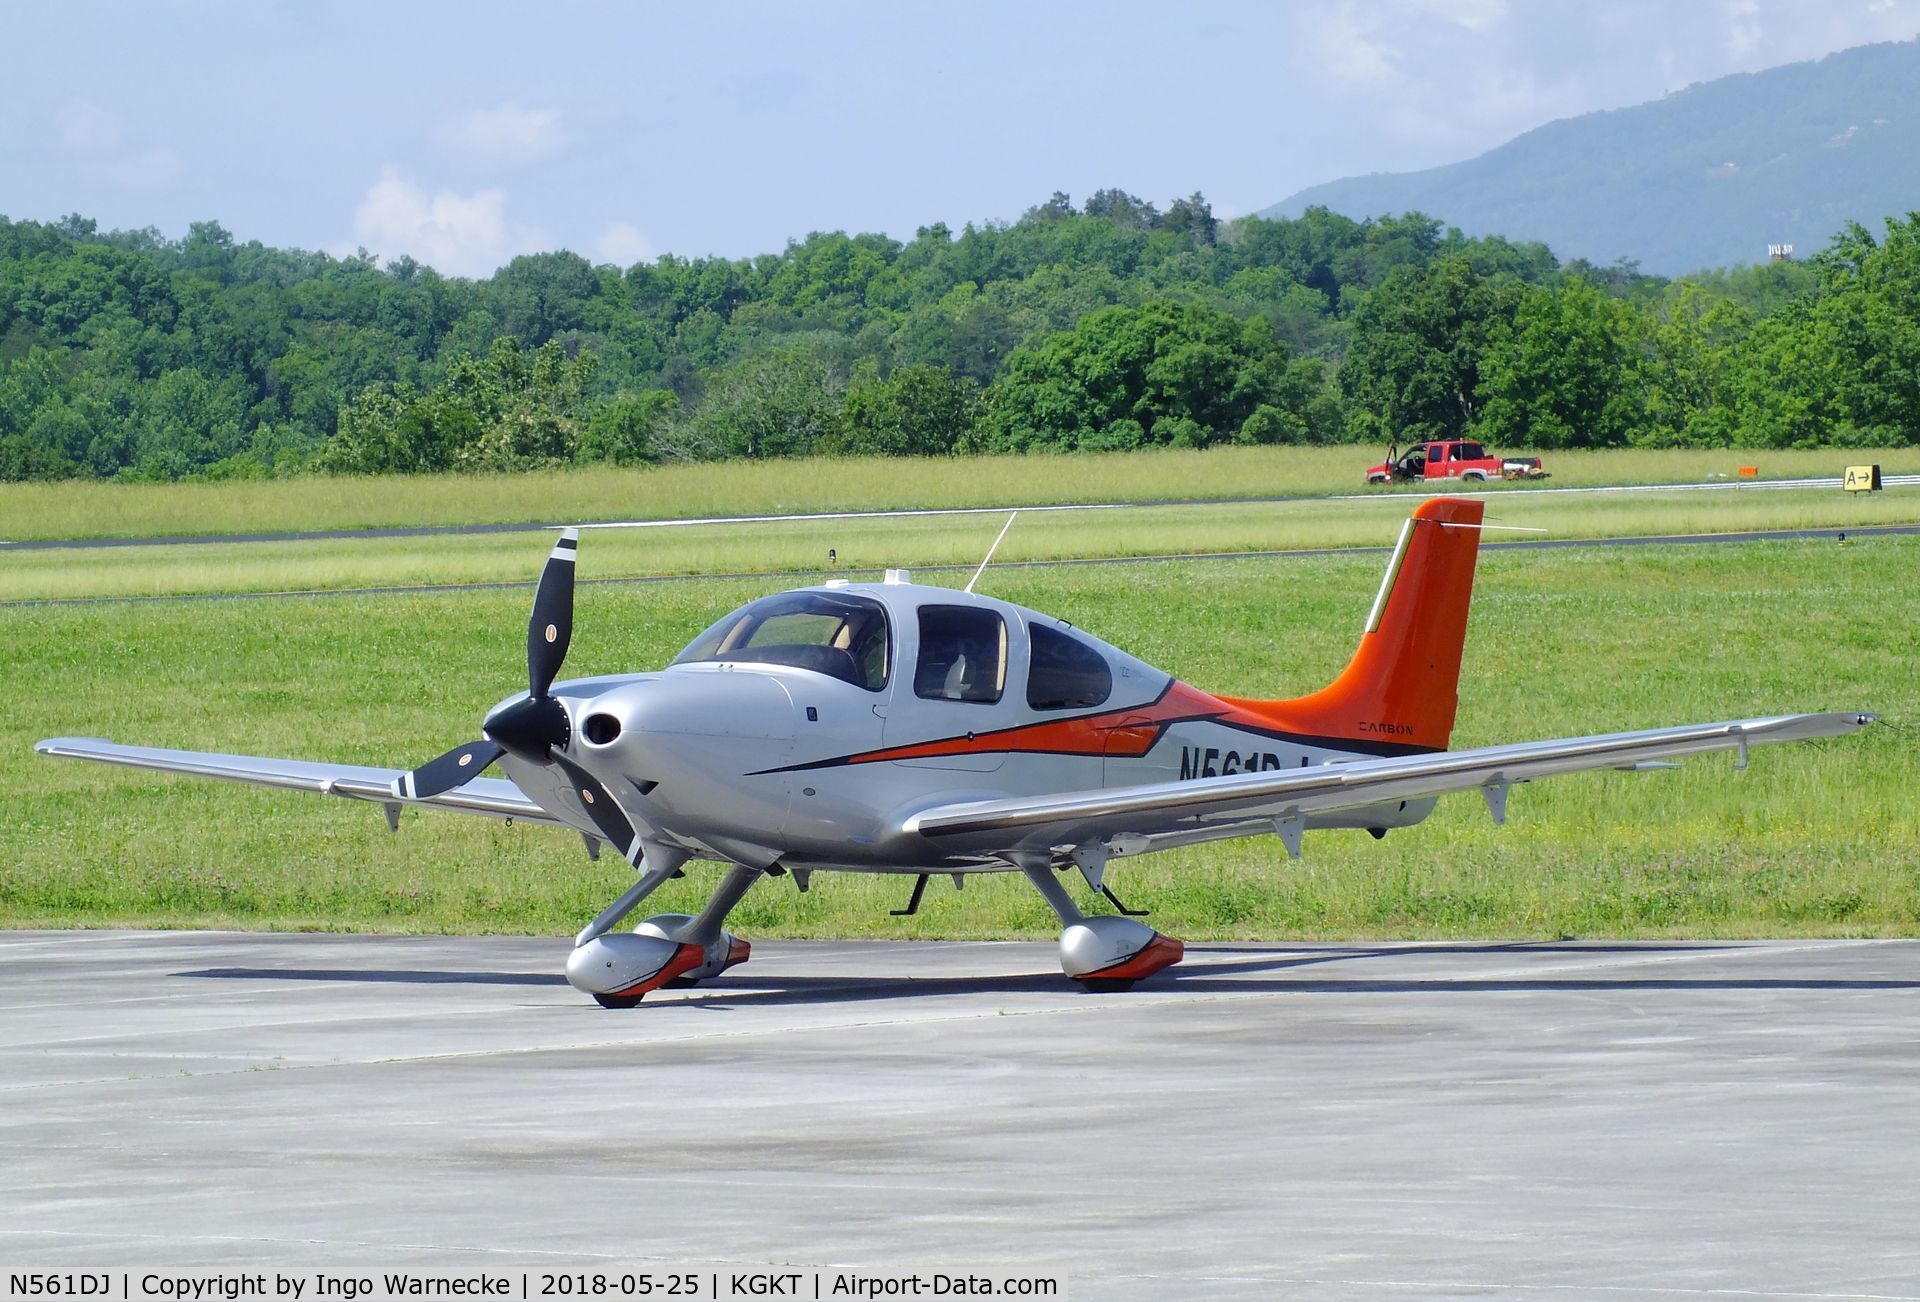 N561DJ, 2014 Cirrus SR22T C/N 0871, Cirrus SR22T at Gatlinburg-Pigeon Forge Airport, Sevierville TN